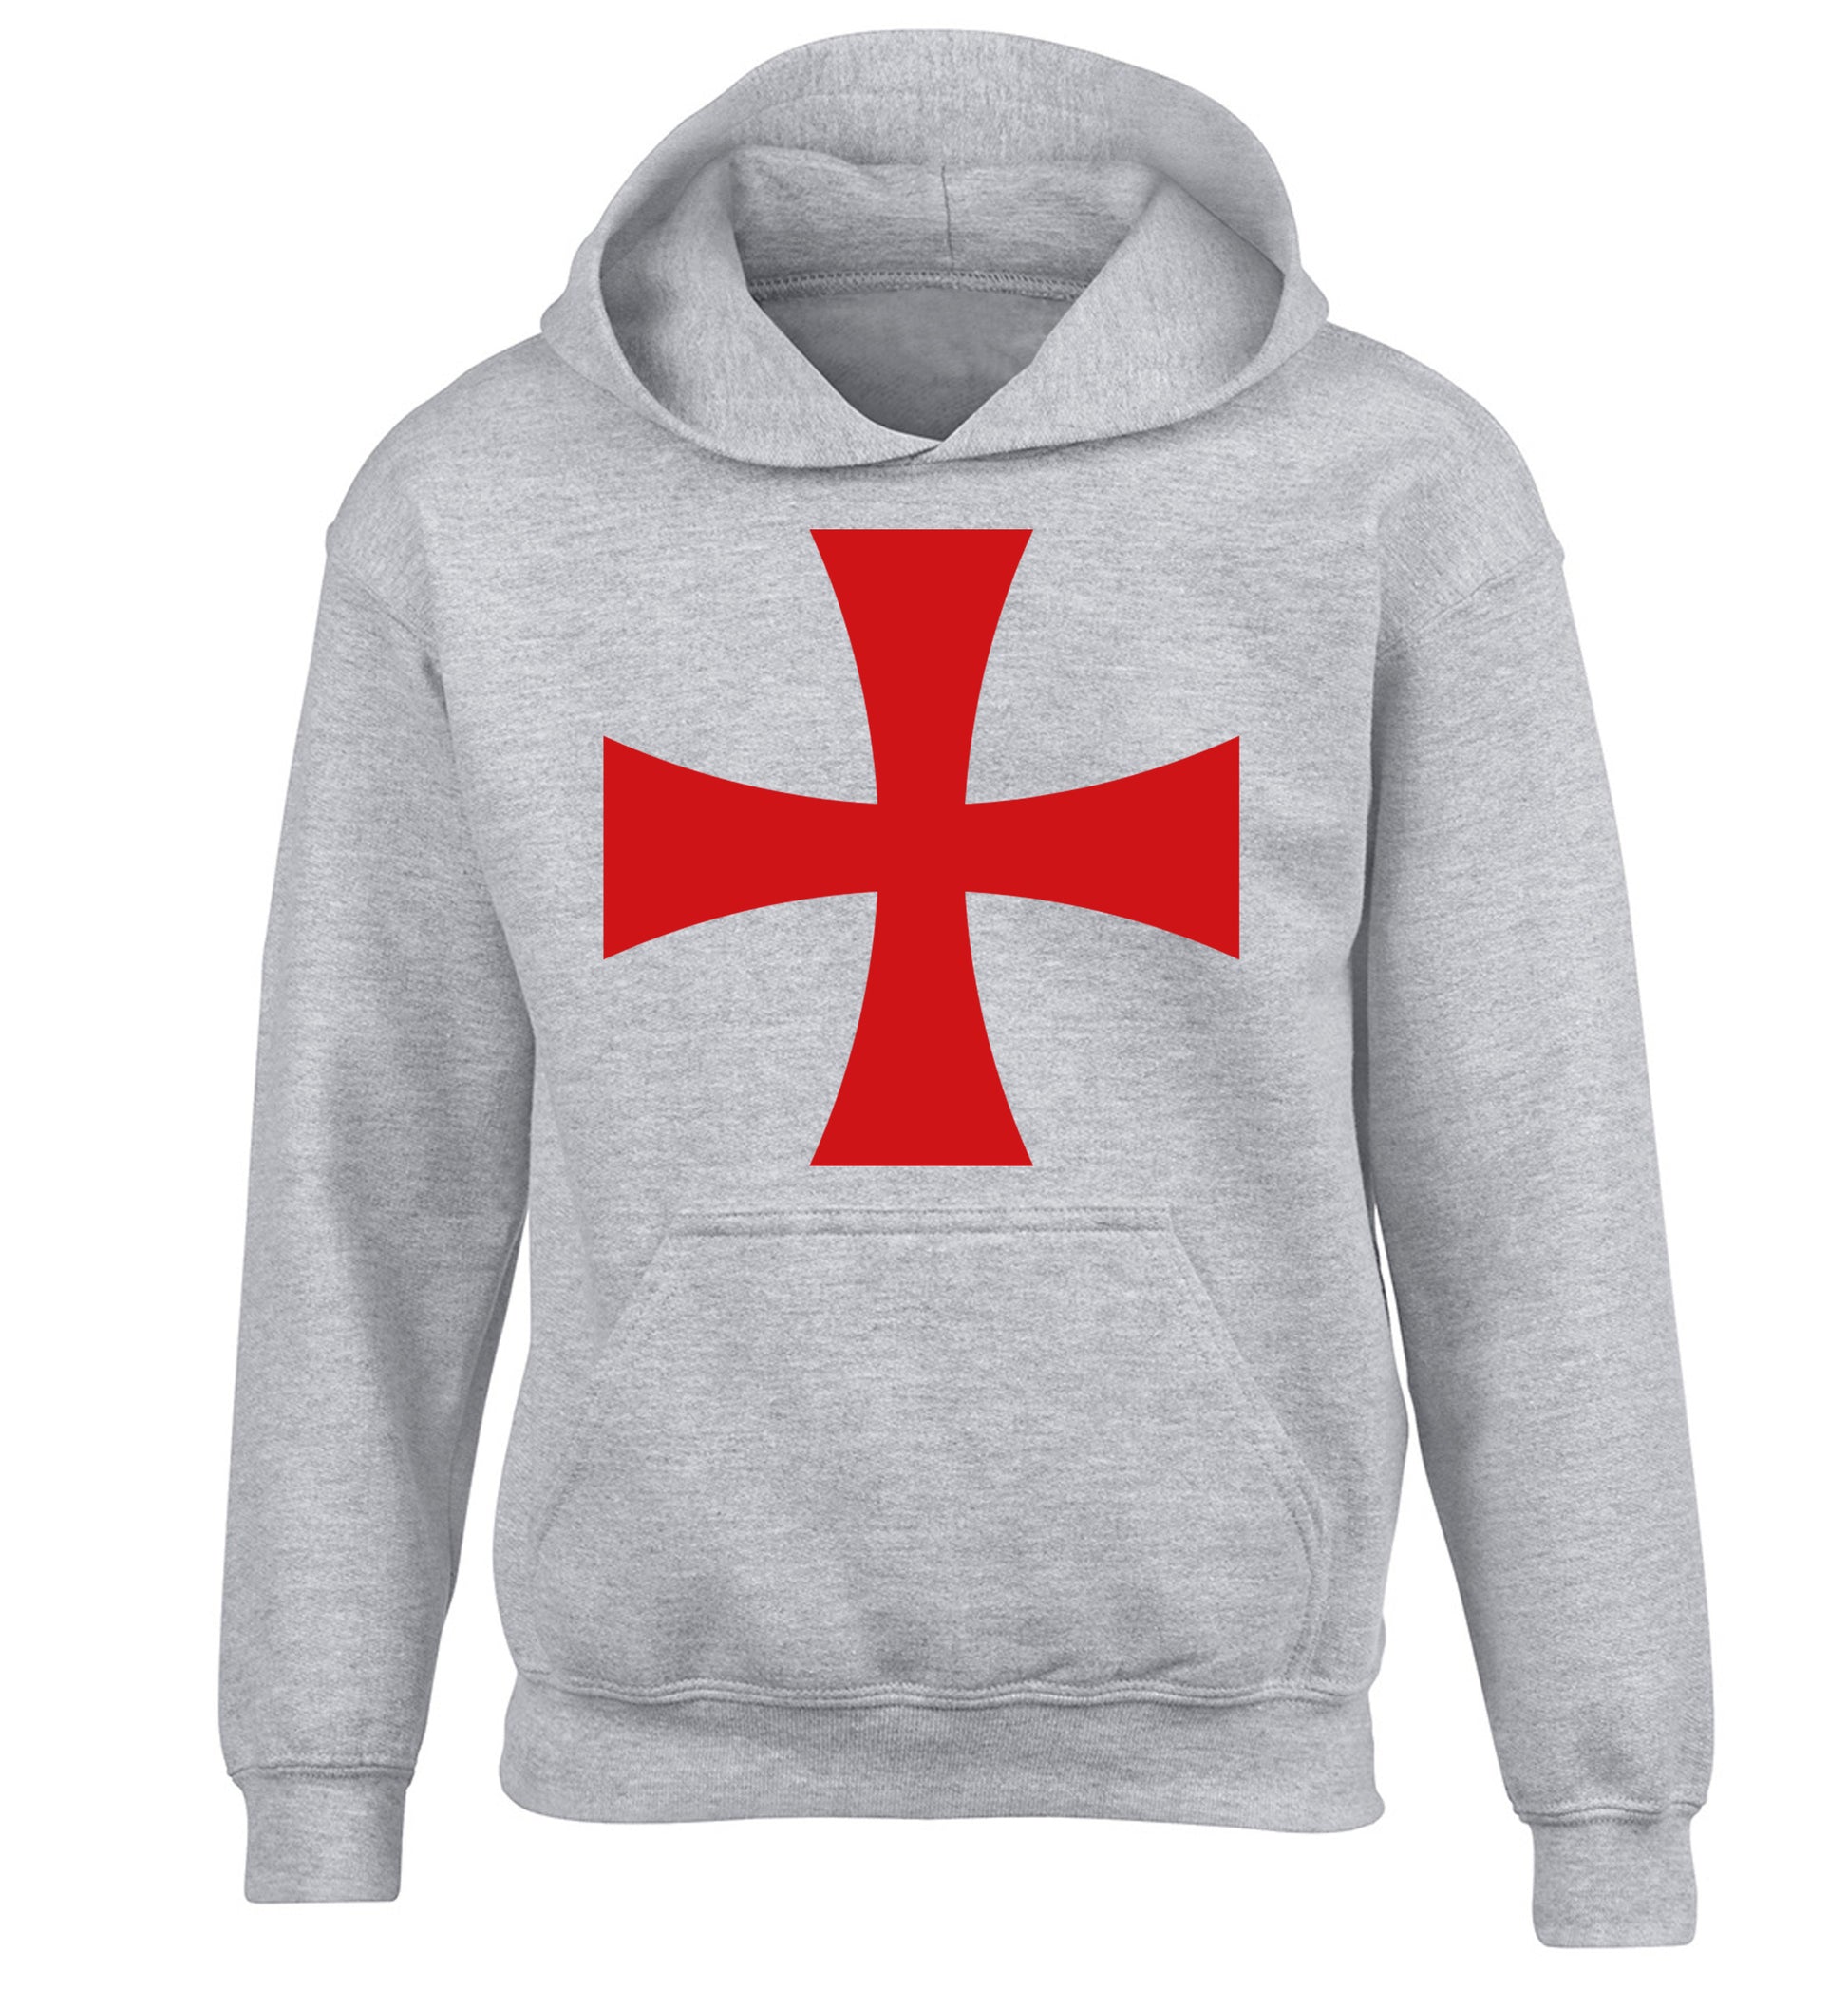 Knights Templar cross children's grey hoodie 12-14 Years